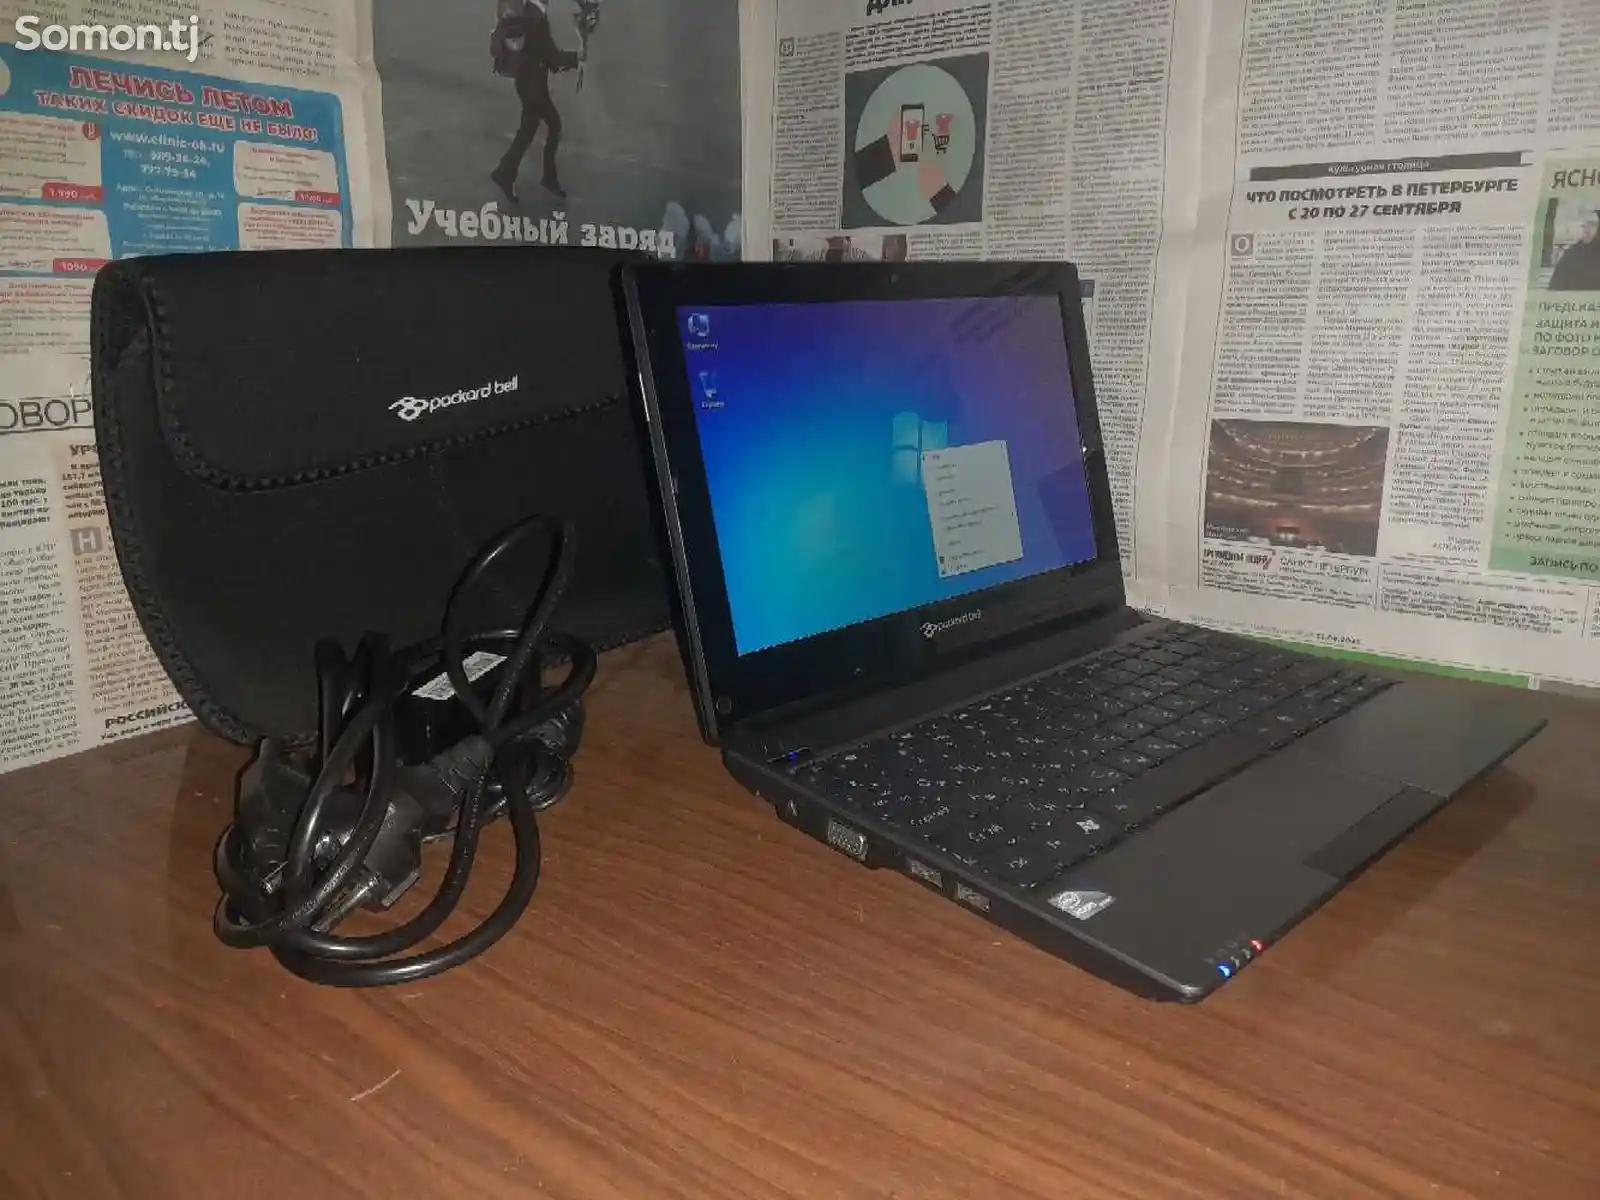 Ноутбук Packard bell 500ГБ, Intel Atom N570, RAM 2 ГБ, Intel GMA 3150-3